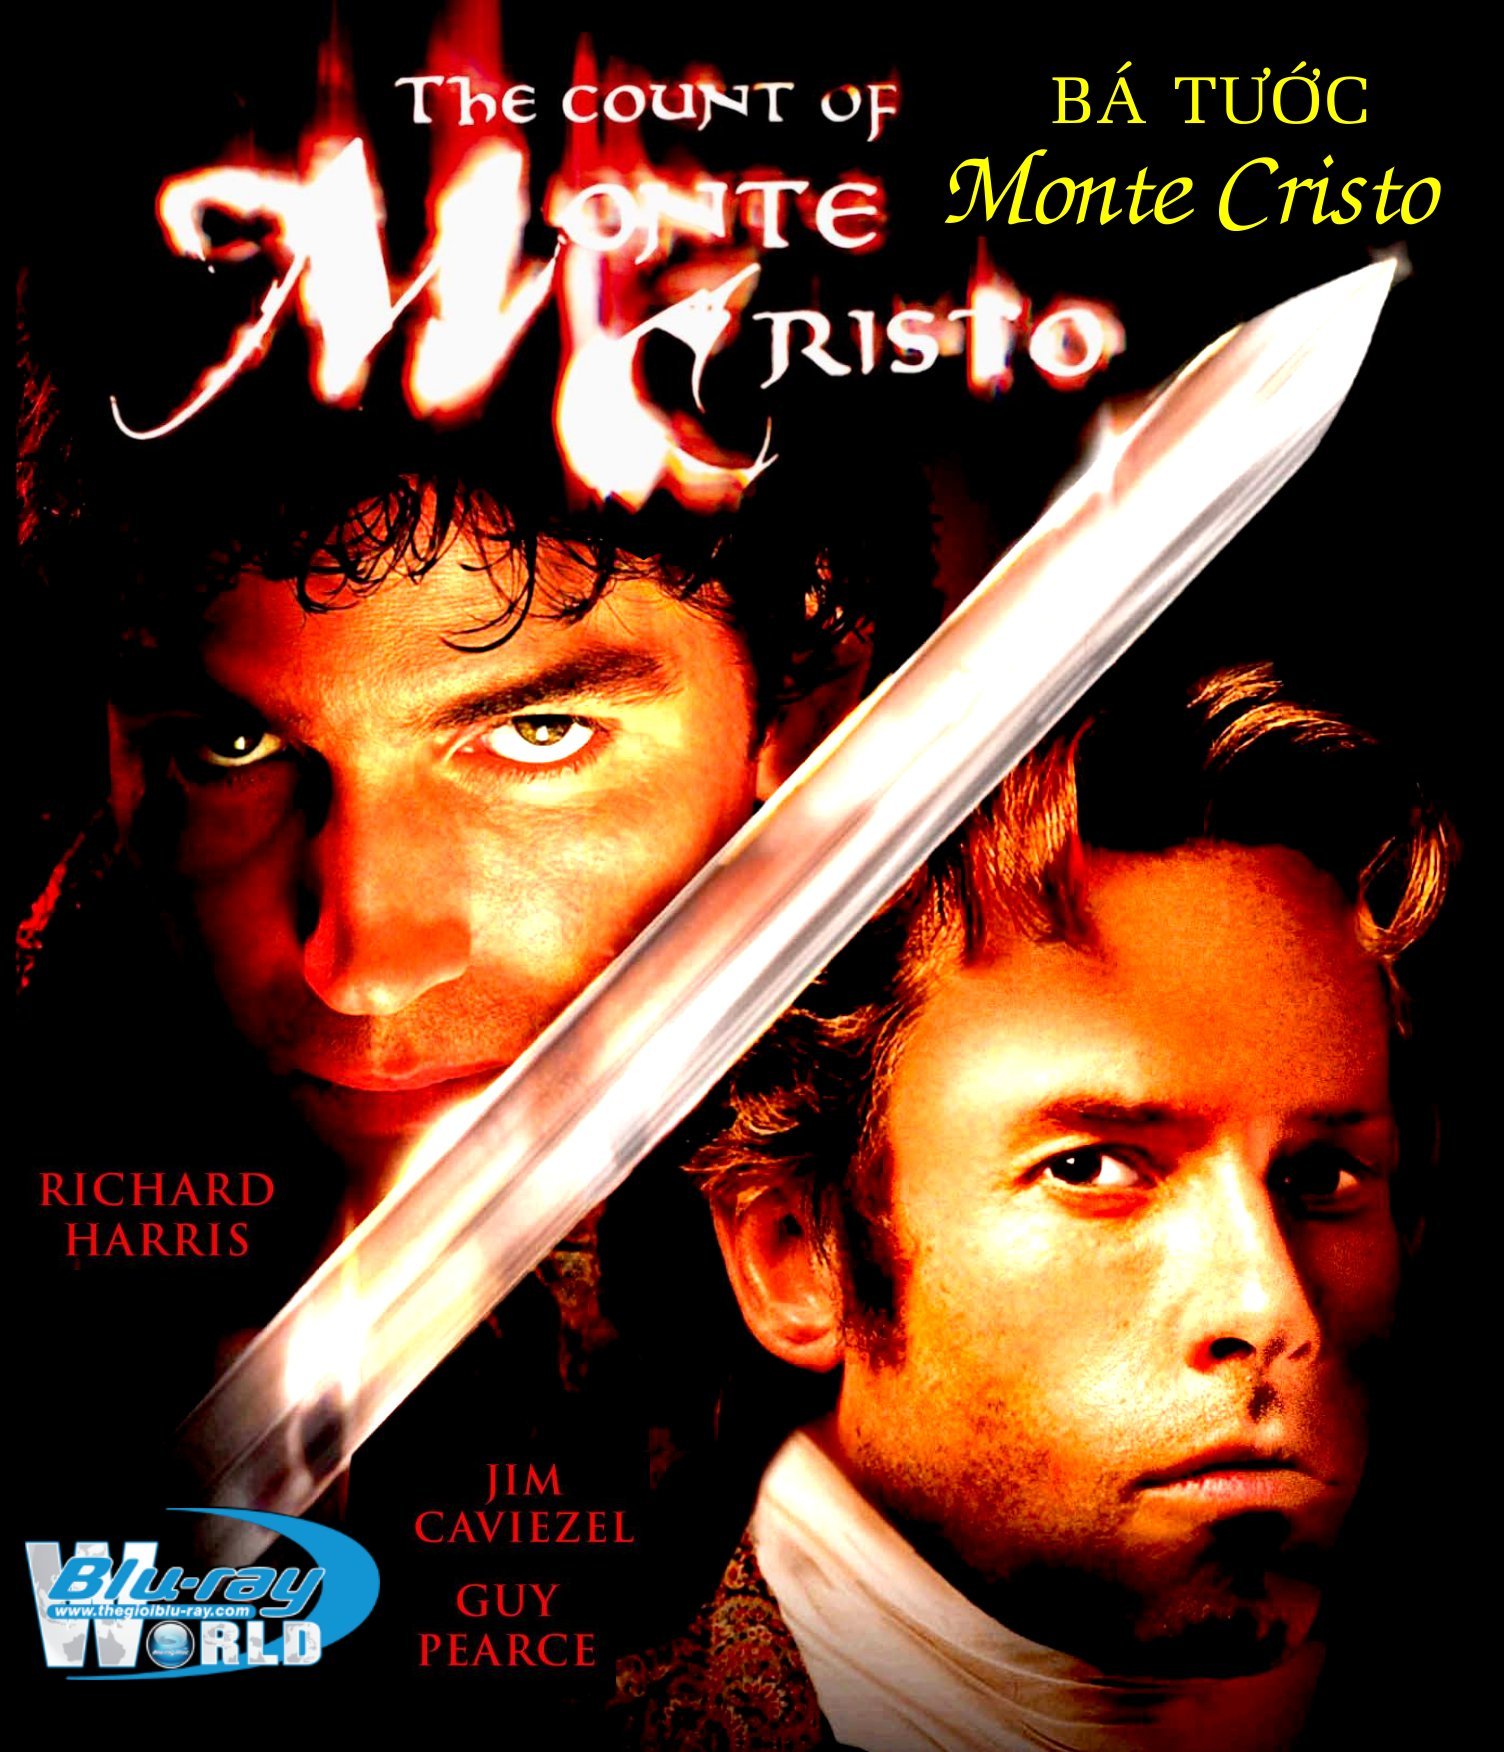 B1707. The Count Of Monte Cristo - BÁ TƯỚC MONTE CRISTO 2D 25G (DTS-HD MA 5.1) 